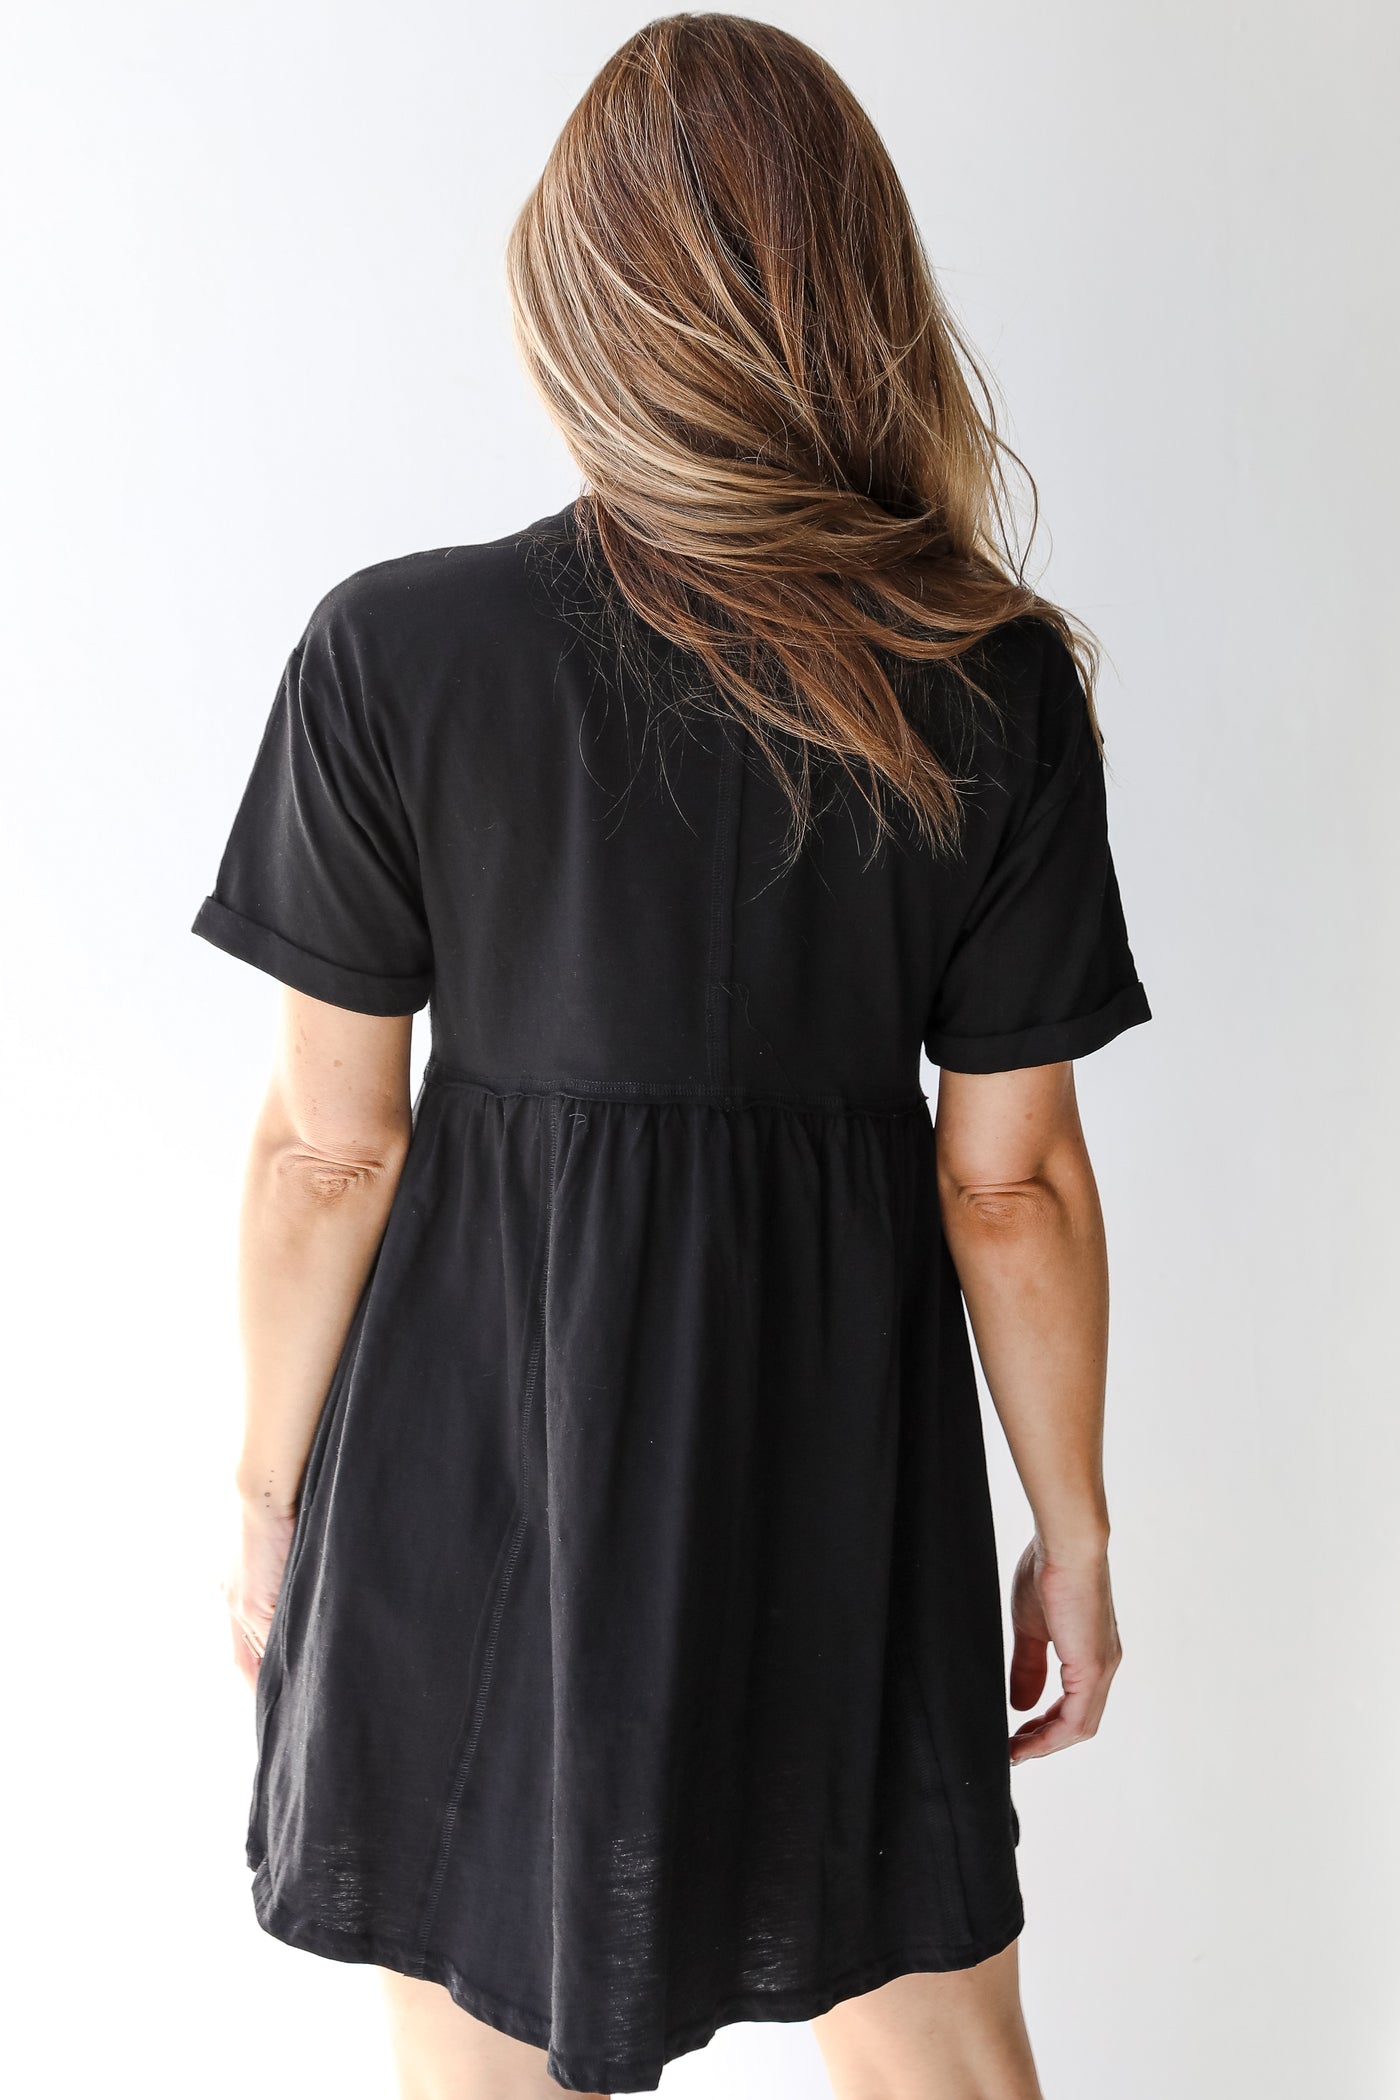 Babydoll Mini Dress in black back view